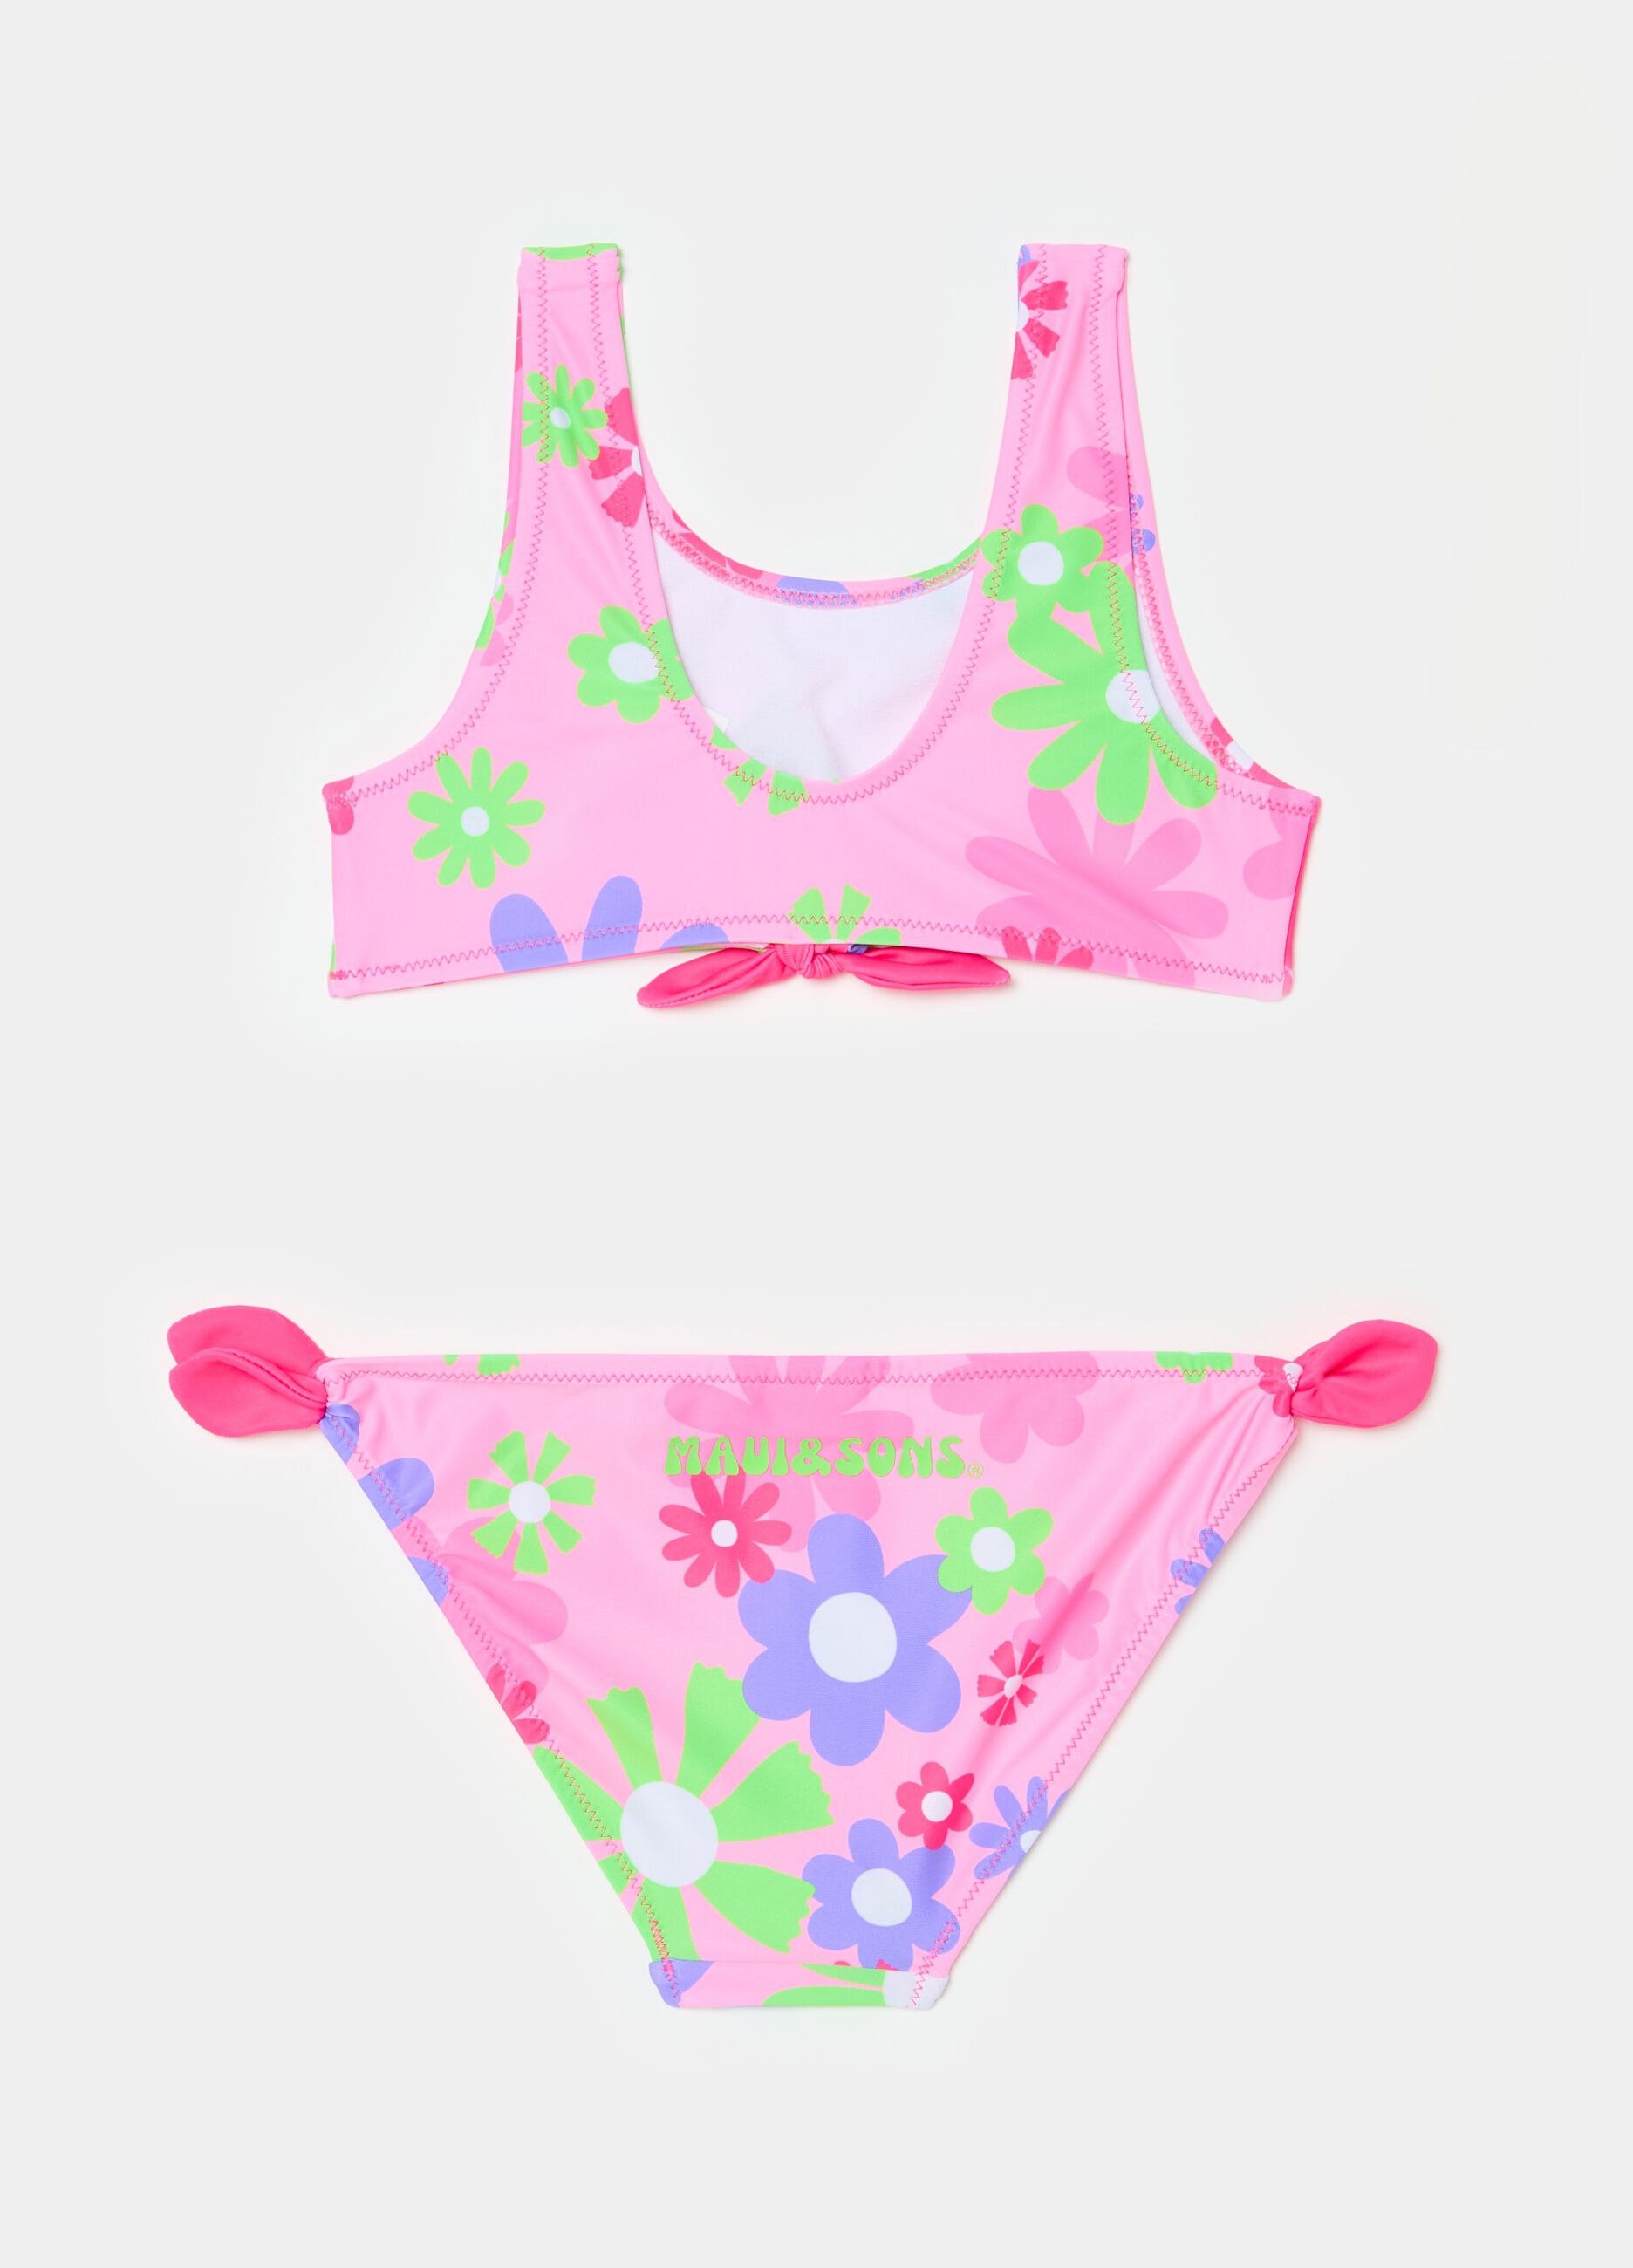 Bikini with floral pattern and logo print